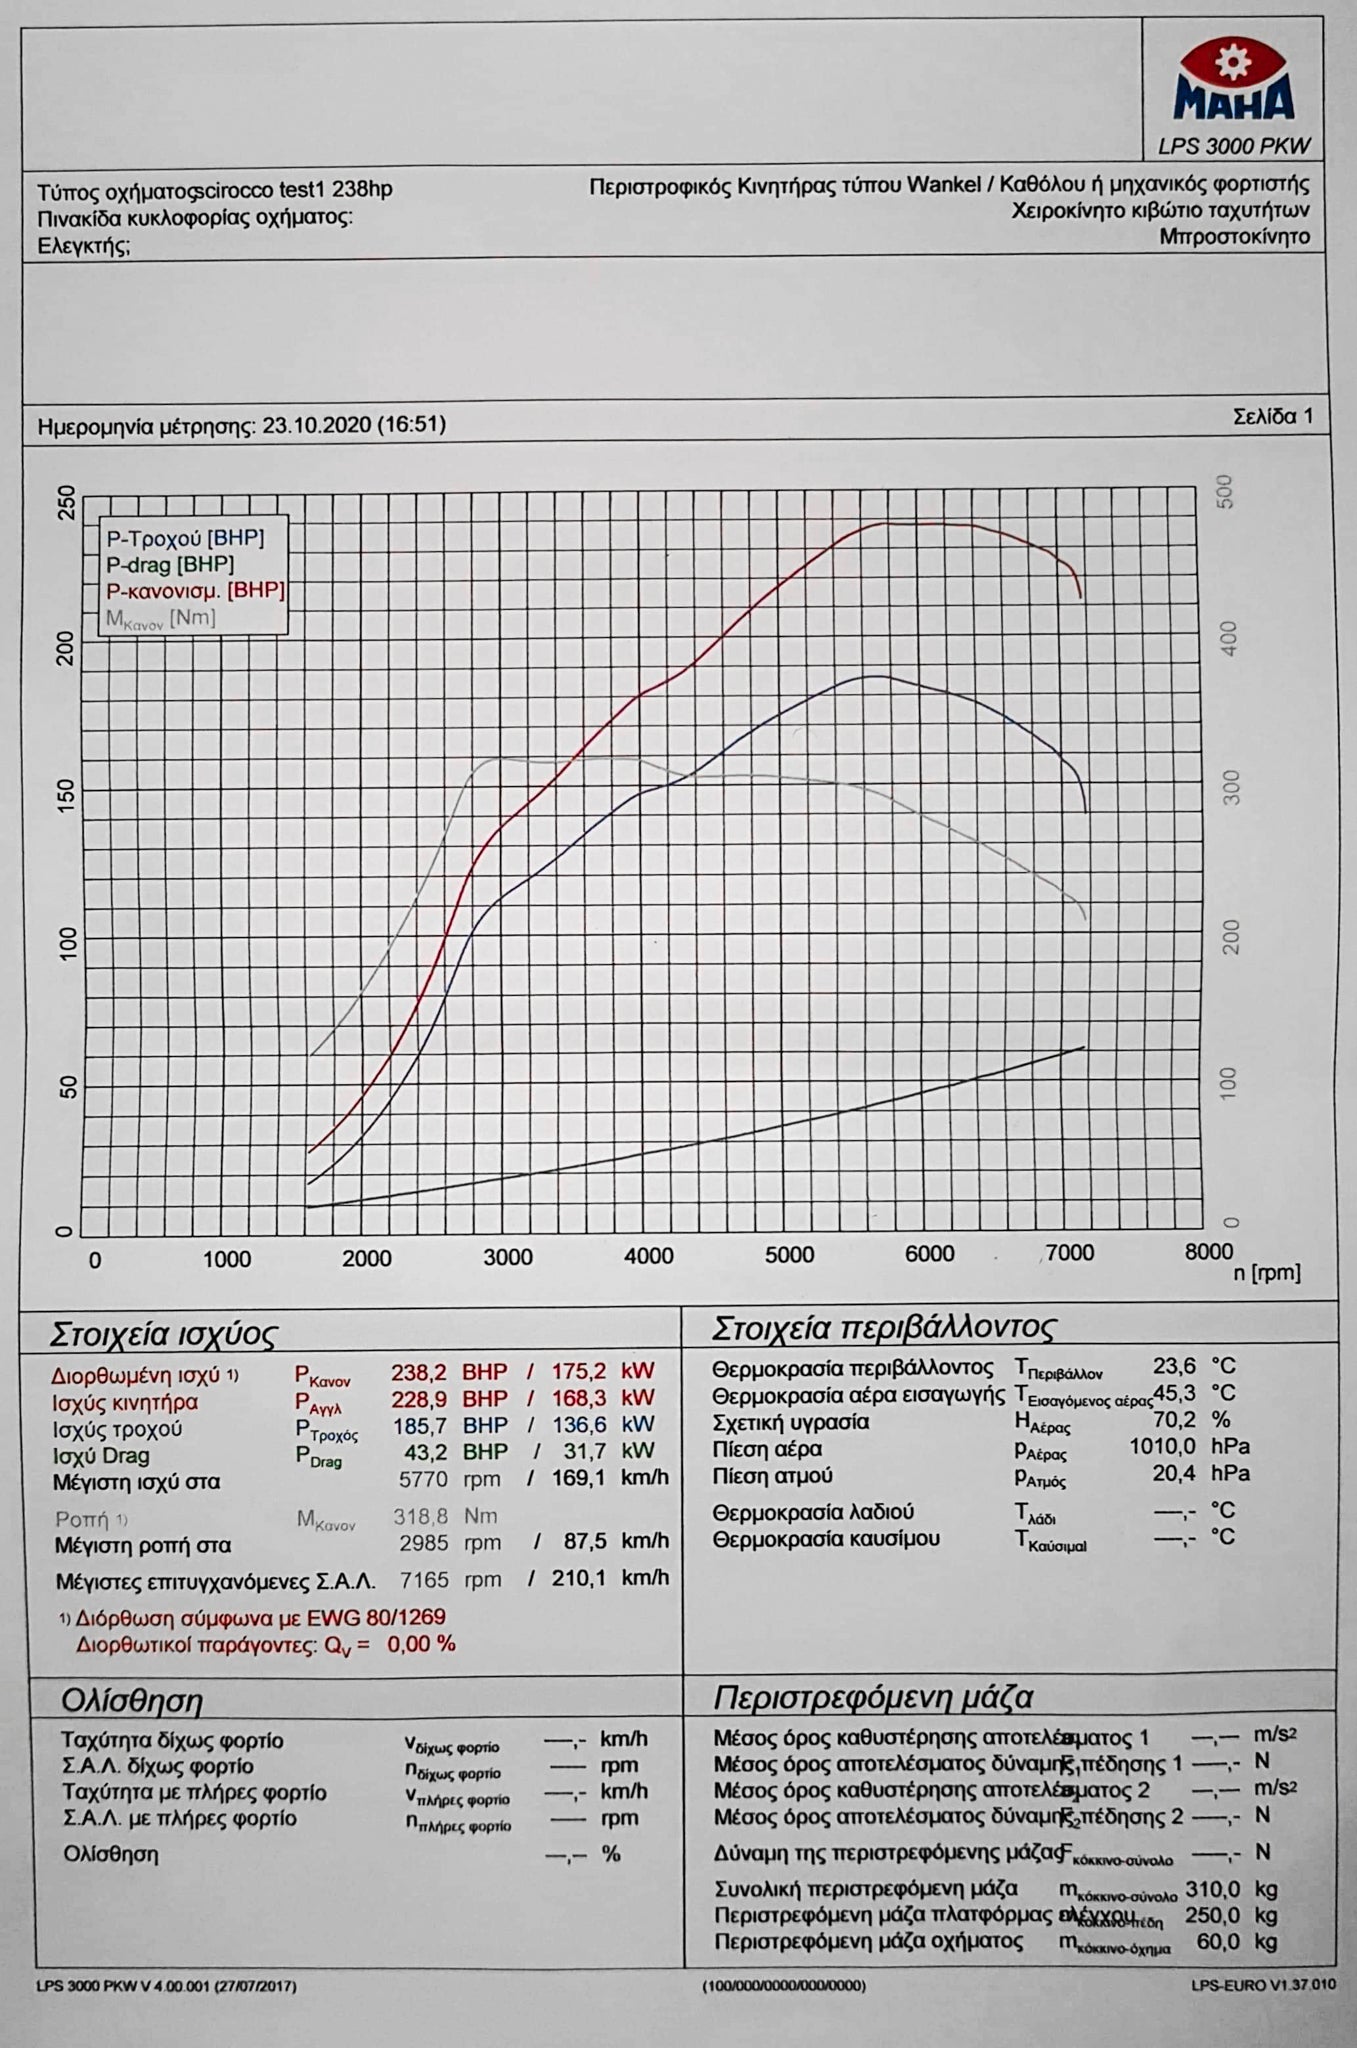 Hybrid Turbocharger 240RS for 1.4 TSI EA211 - Audi A3 / Golf 7 / Polo / Scirocco / Ibiza - RTMG Performance